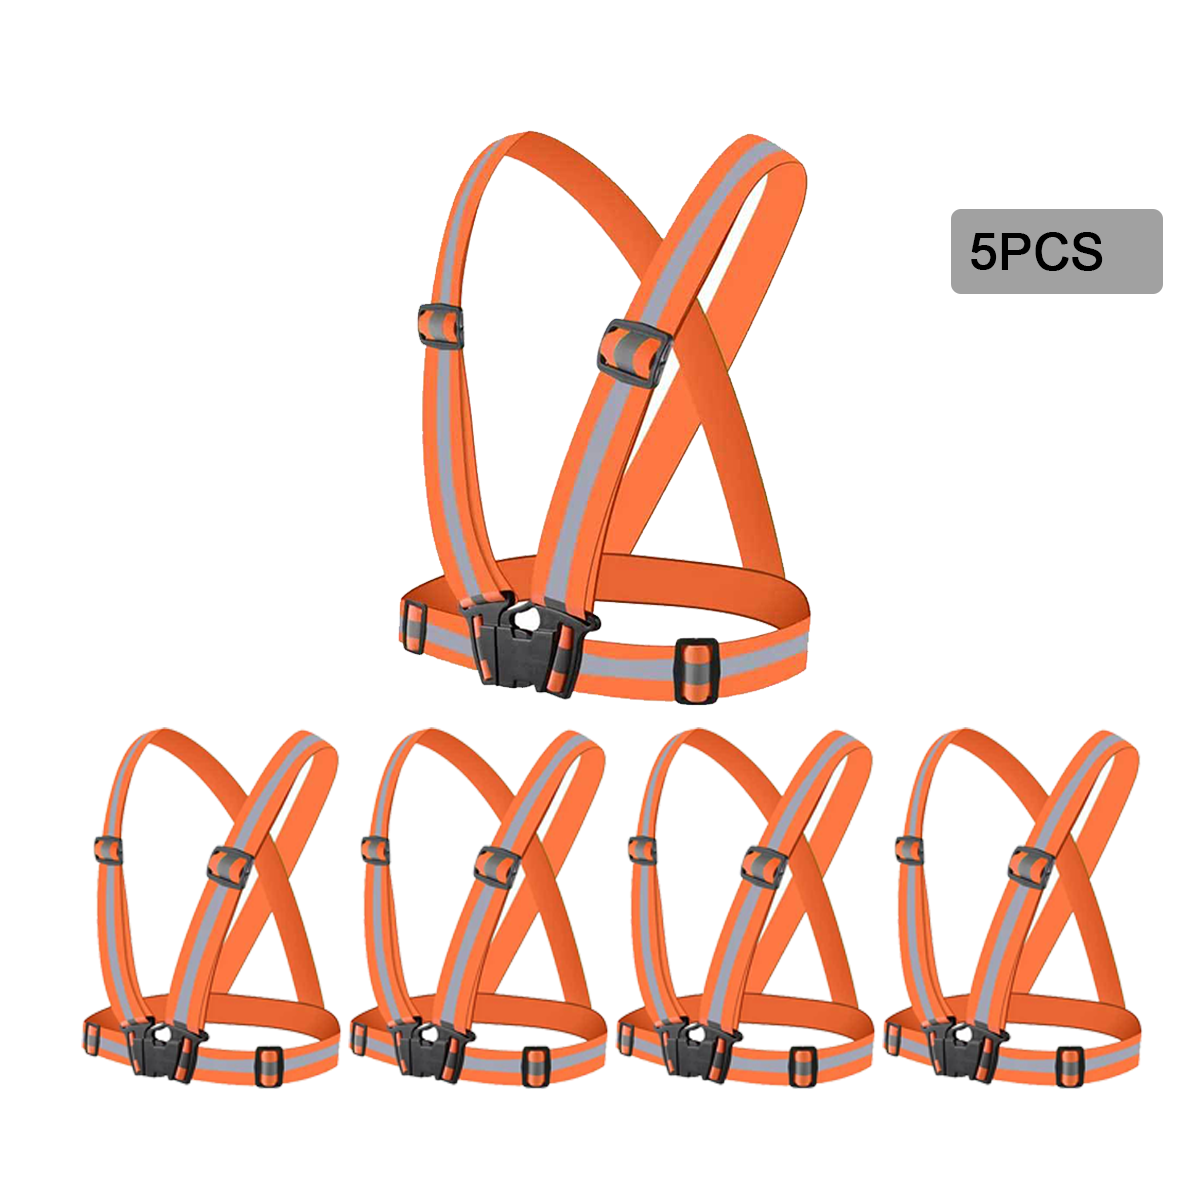 5pcs safety straps orange